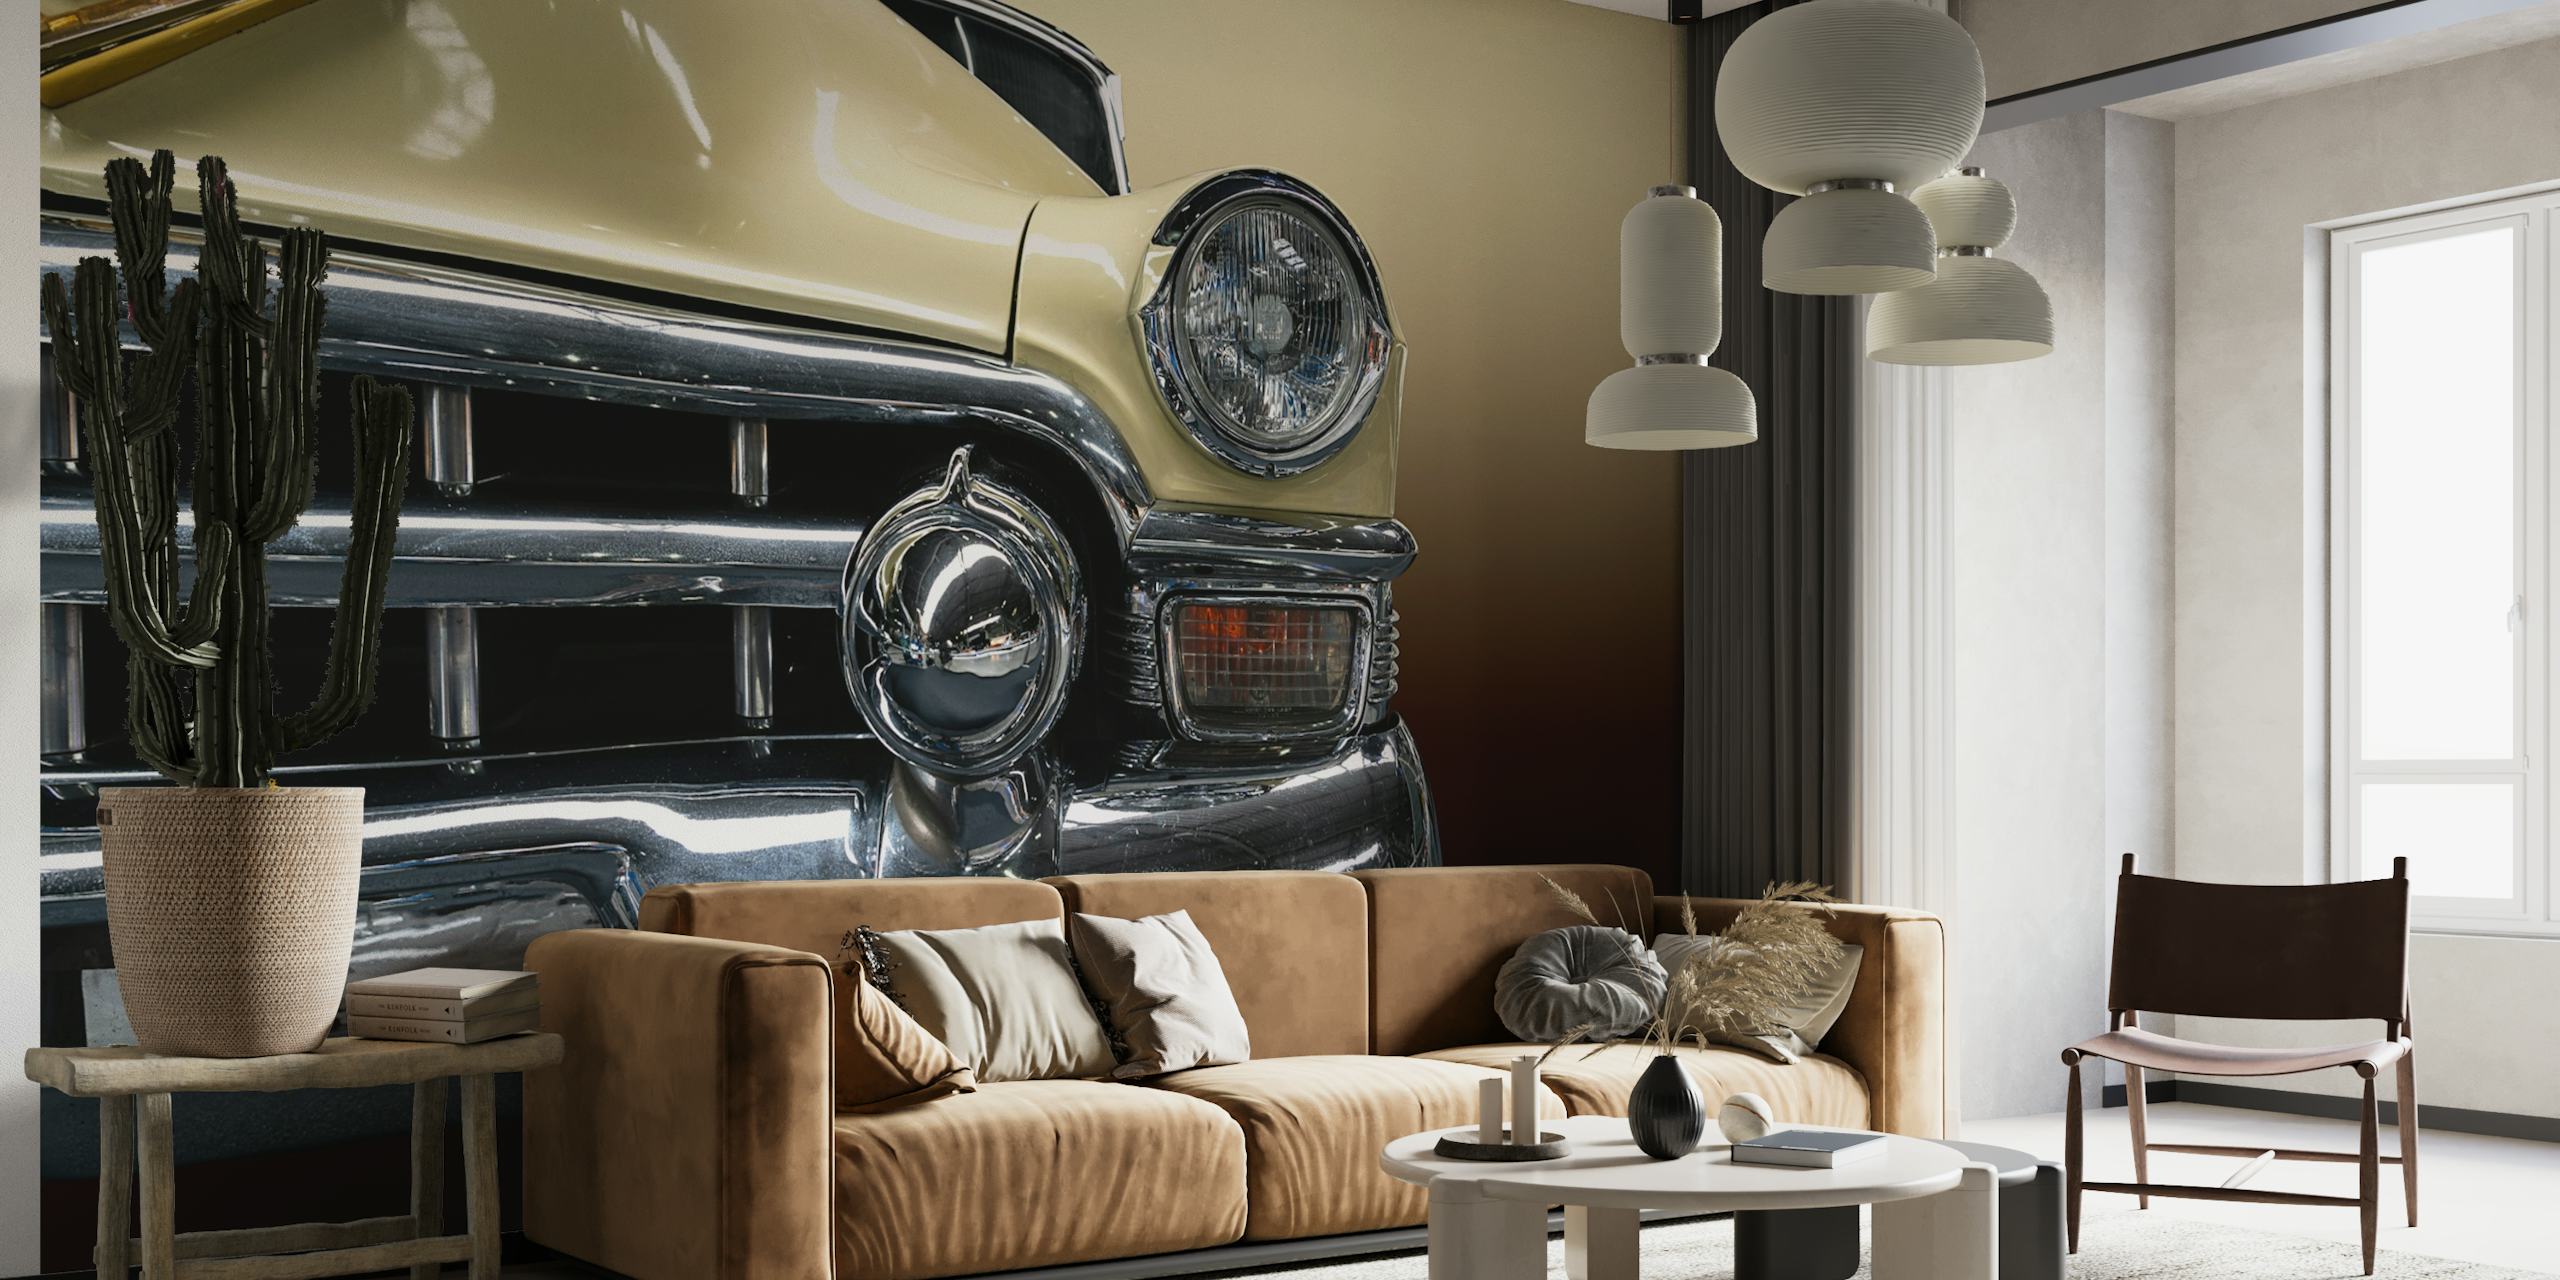 Fotomural Cadillac beige vintage con detalles cromados